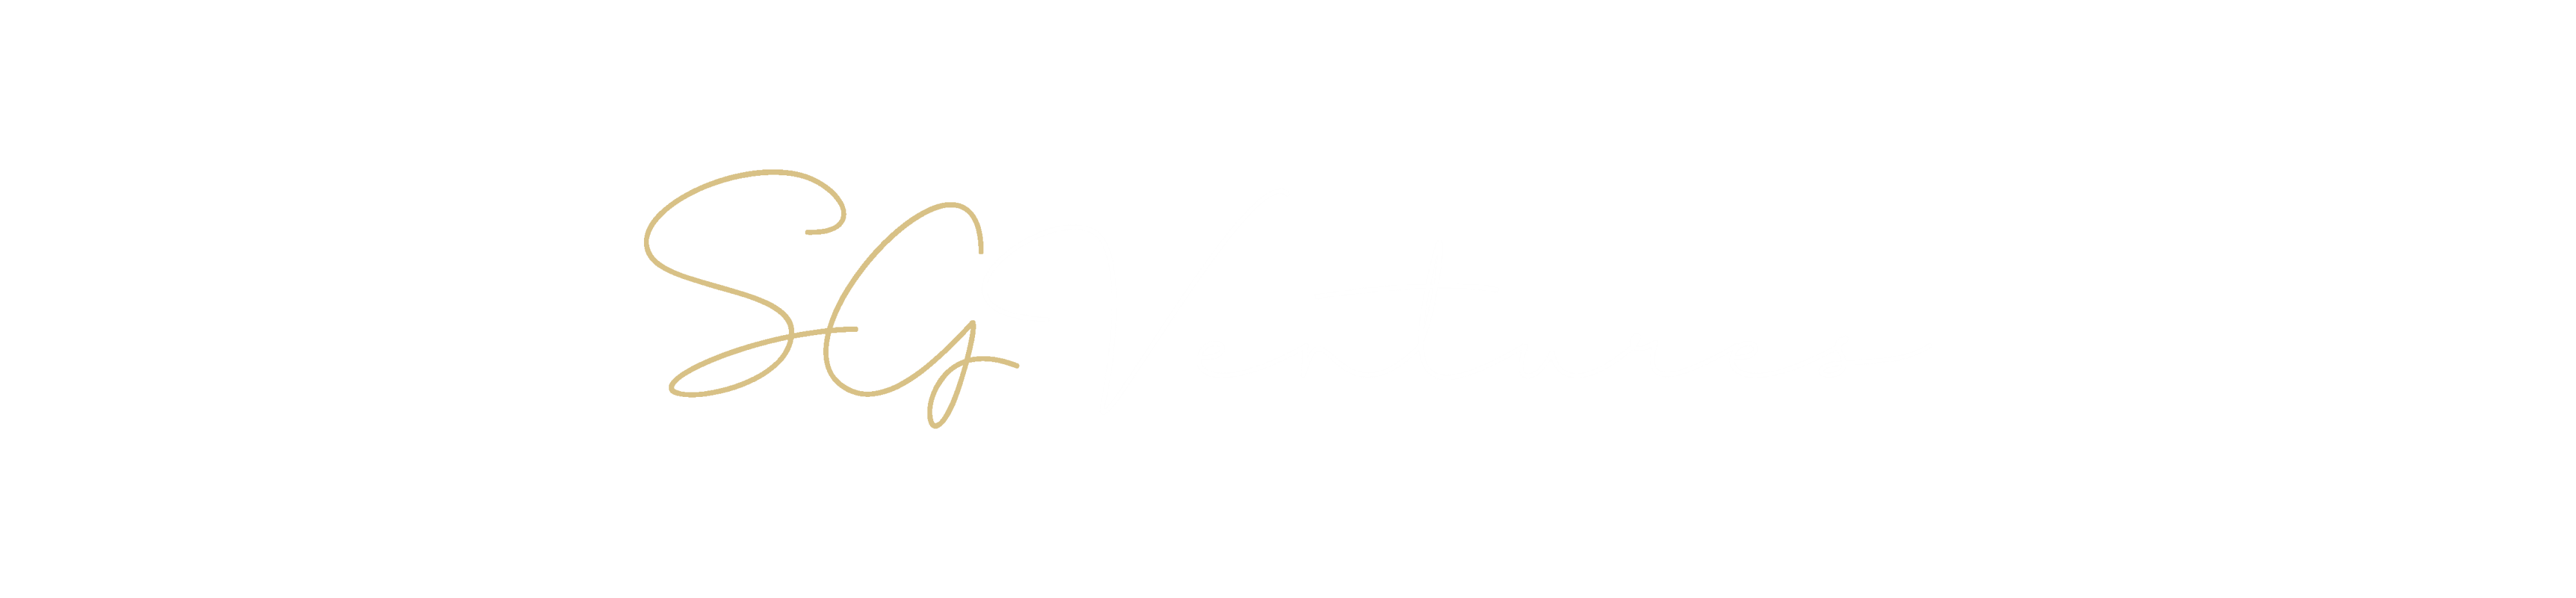 SG Ventures cursive logo